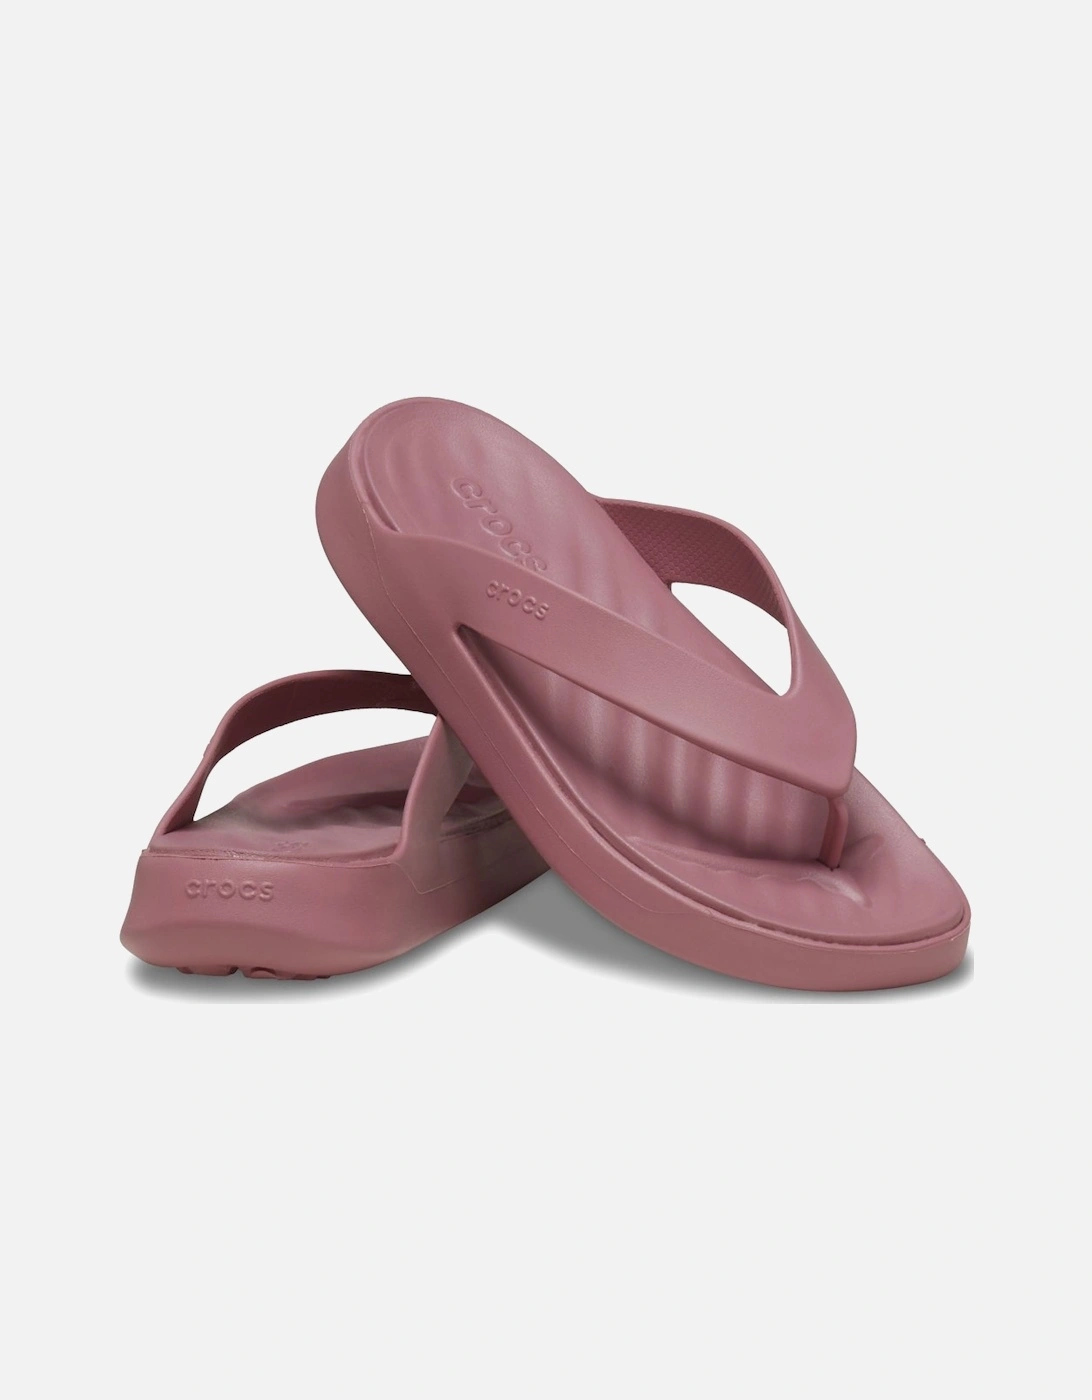 Getaway Flip Womens Sandals